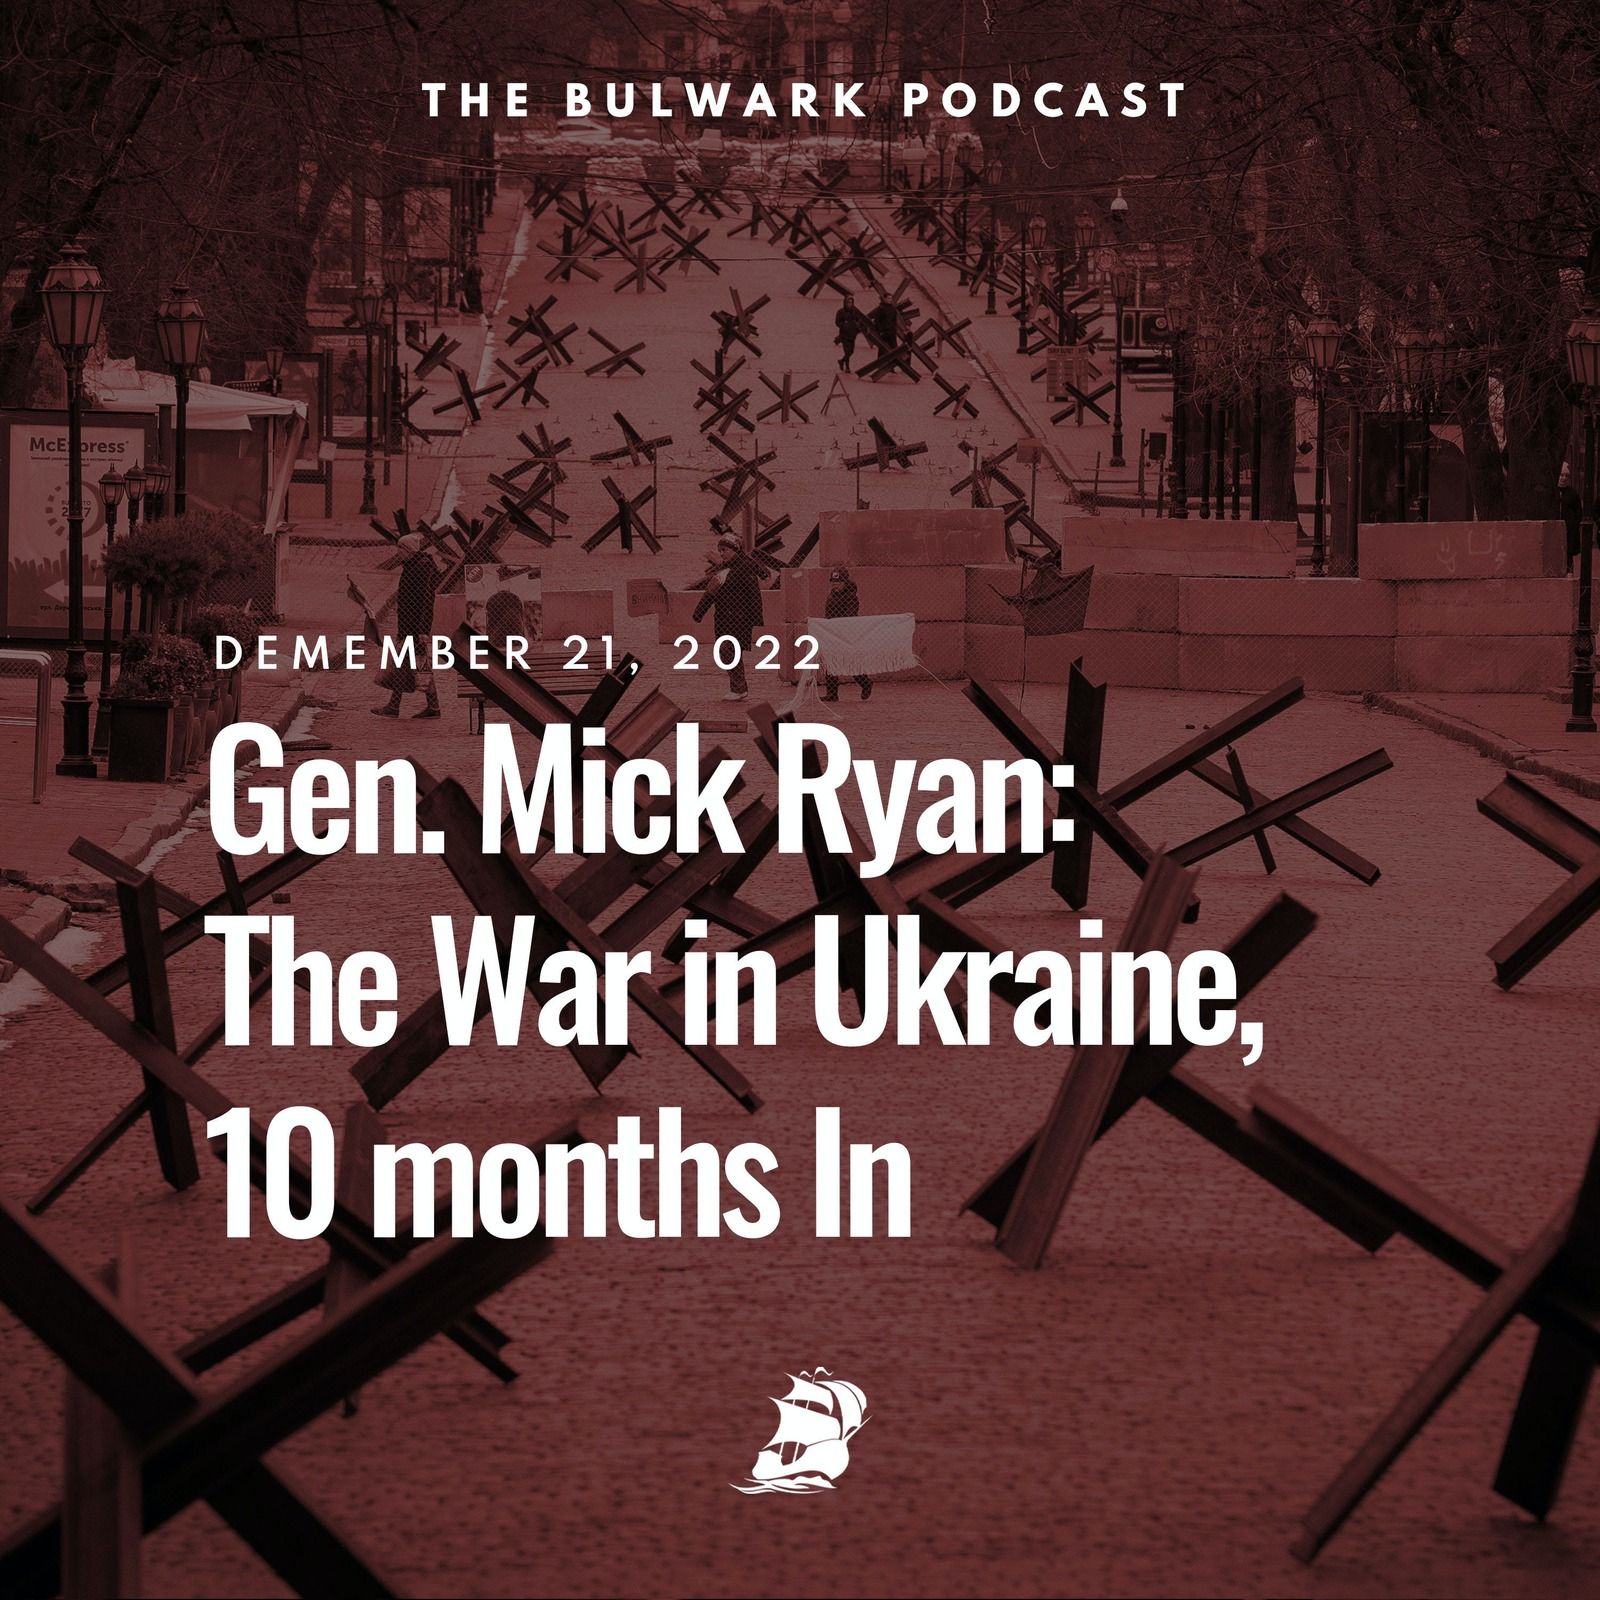 Gen. Mick Ryan: The War in Ukraine, 10 months In by The Bulwark Podcast